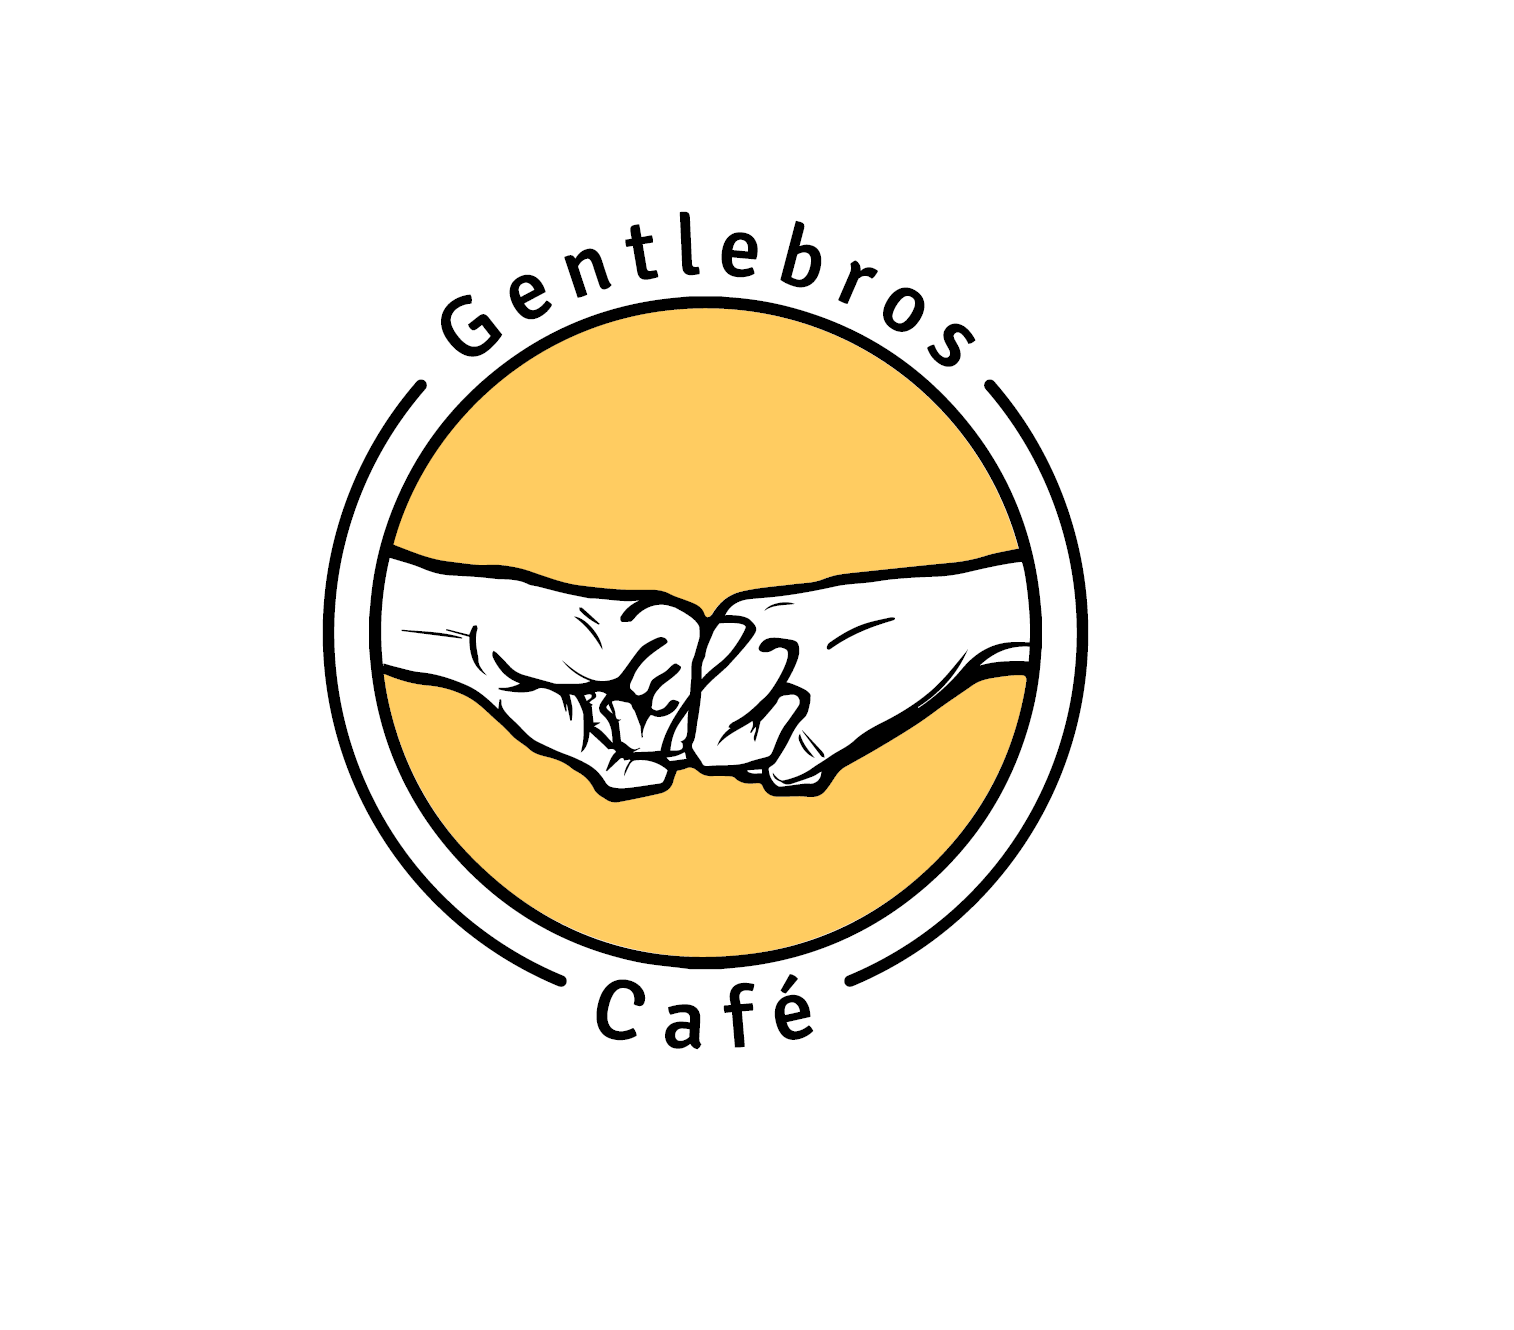 Gentlebros Cafe